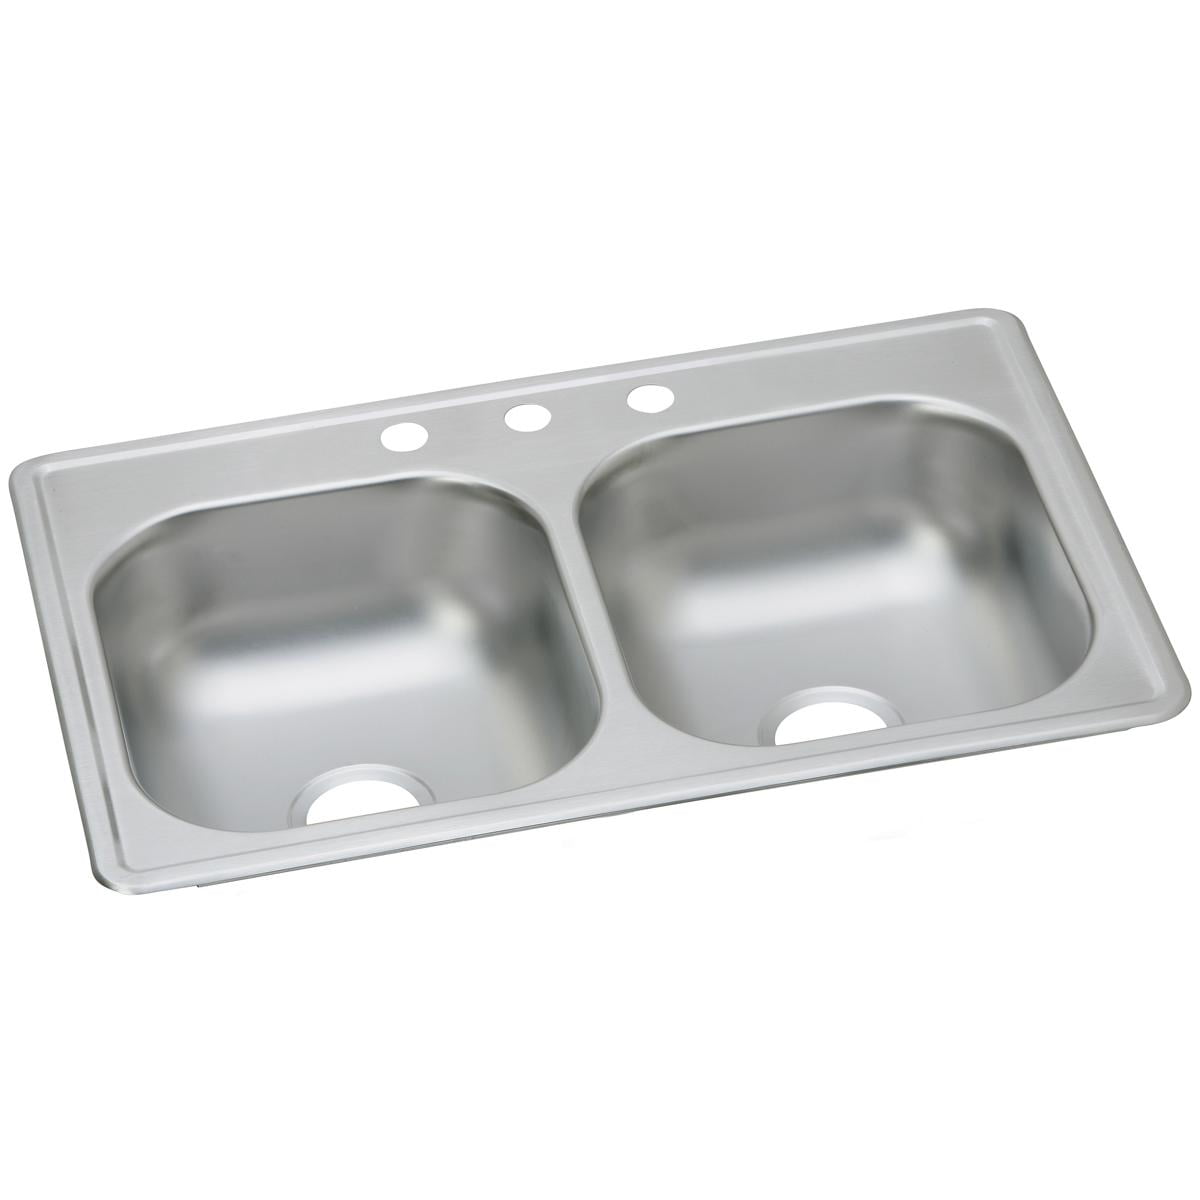 Details about   33"x19" Stainless Steel Undermount Kitchen Sink Rectangular 50/50 with Grid 